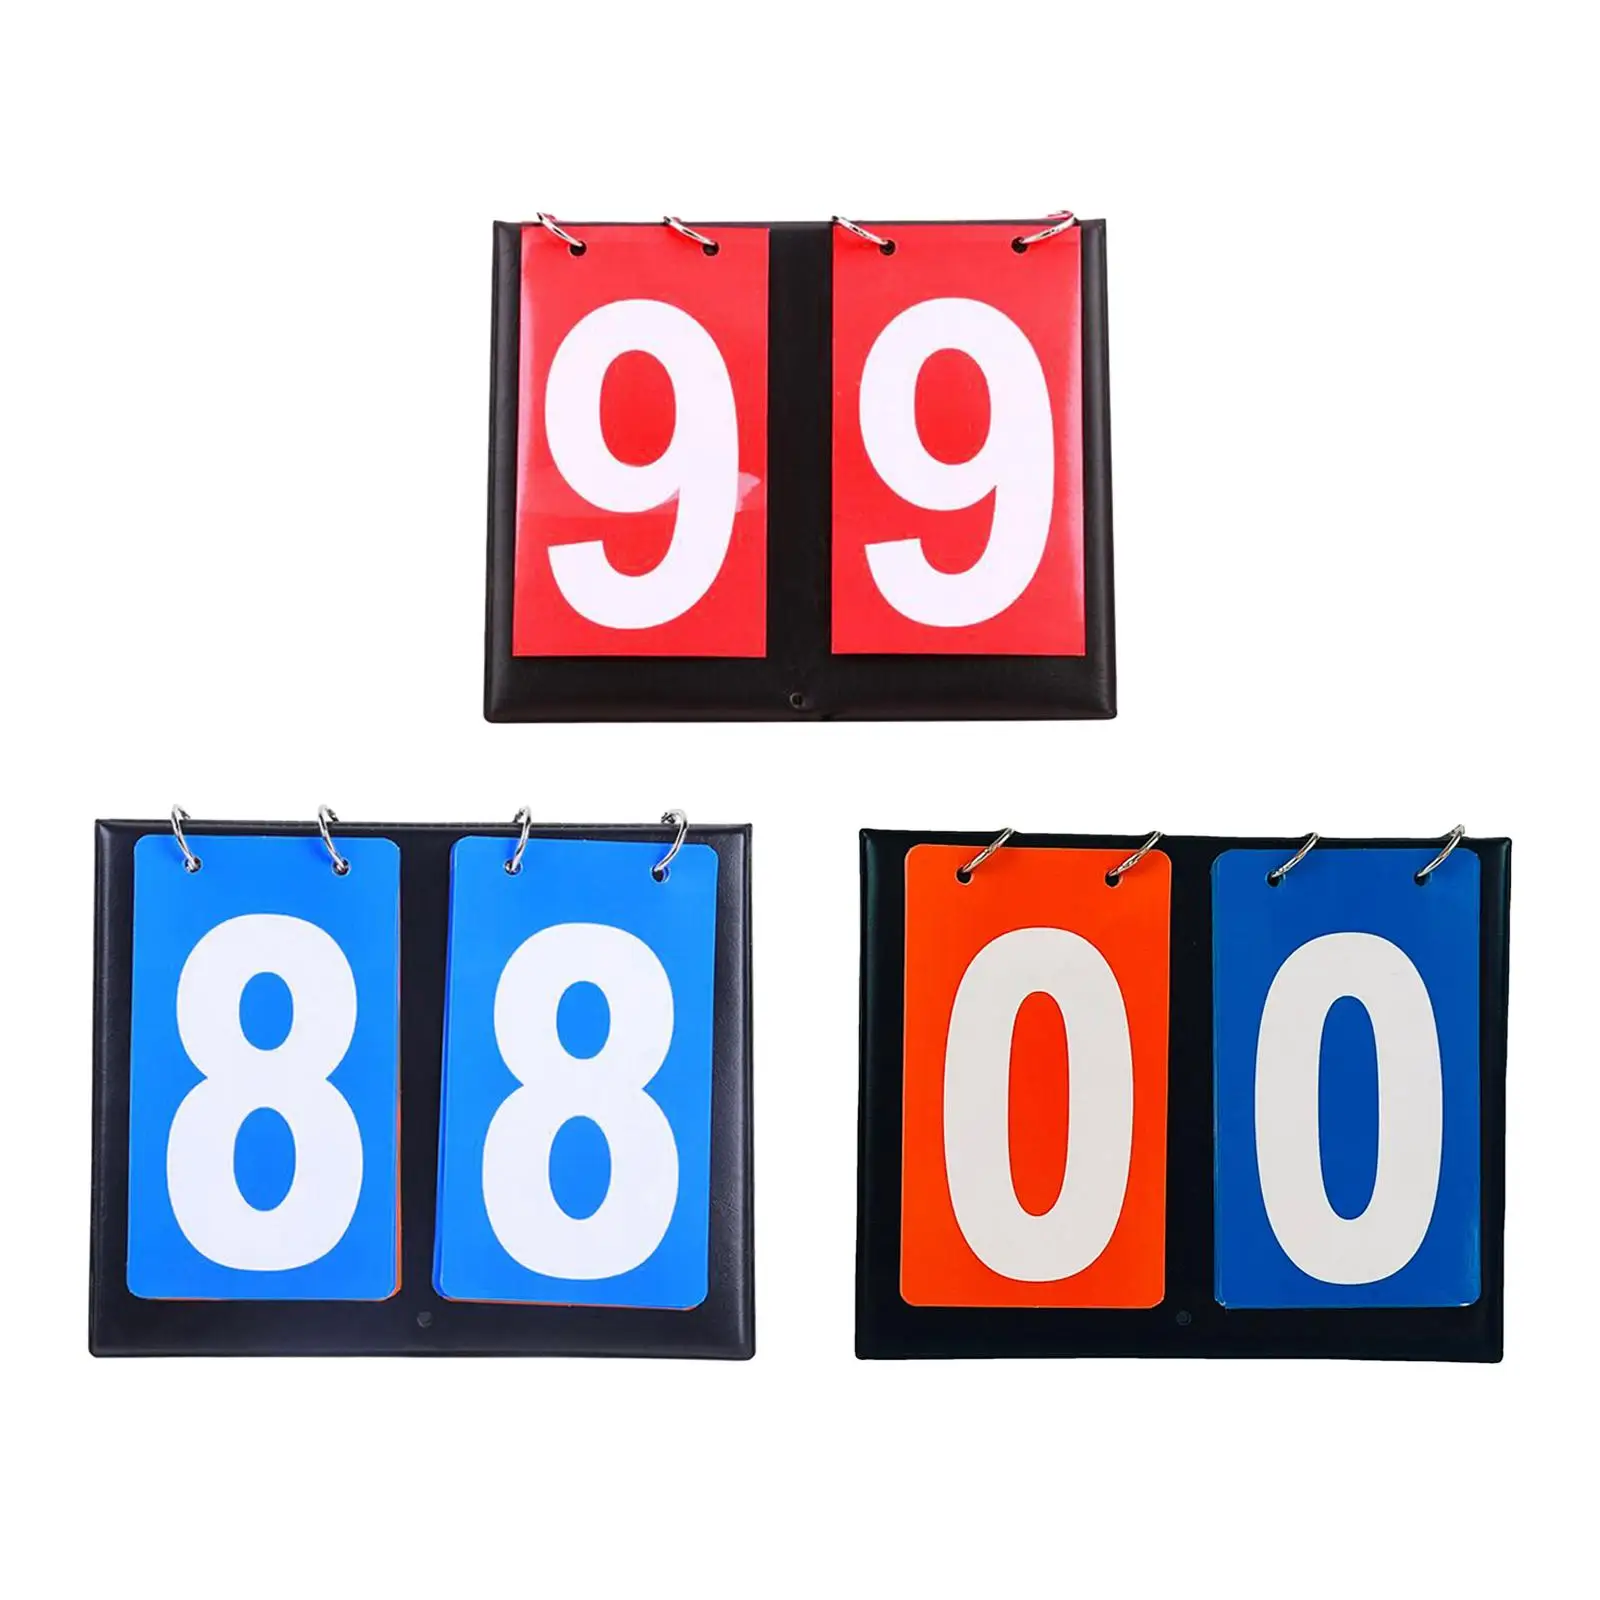 Table Top Scoreboard Scoring Score Keeper for Basketball Outdoor Sports